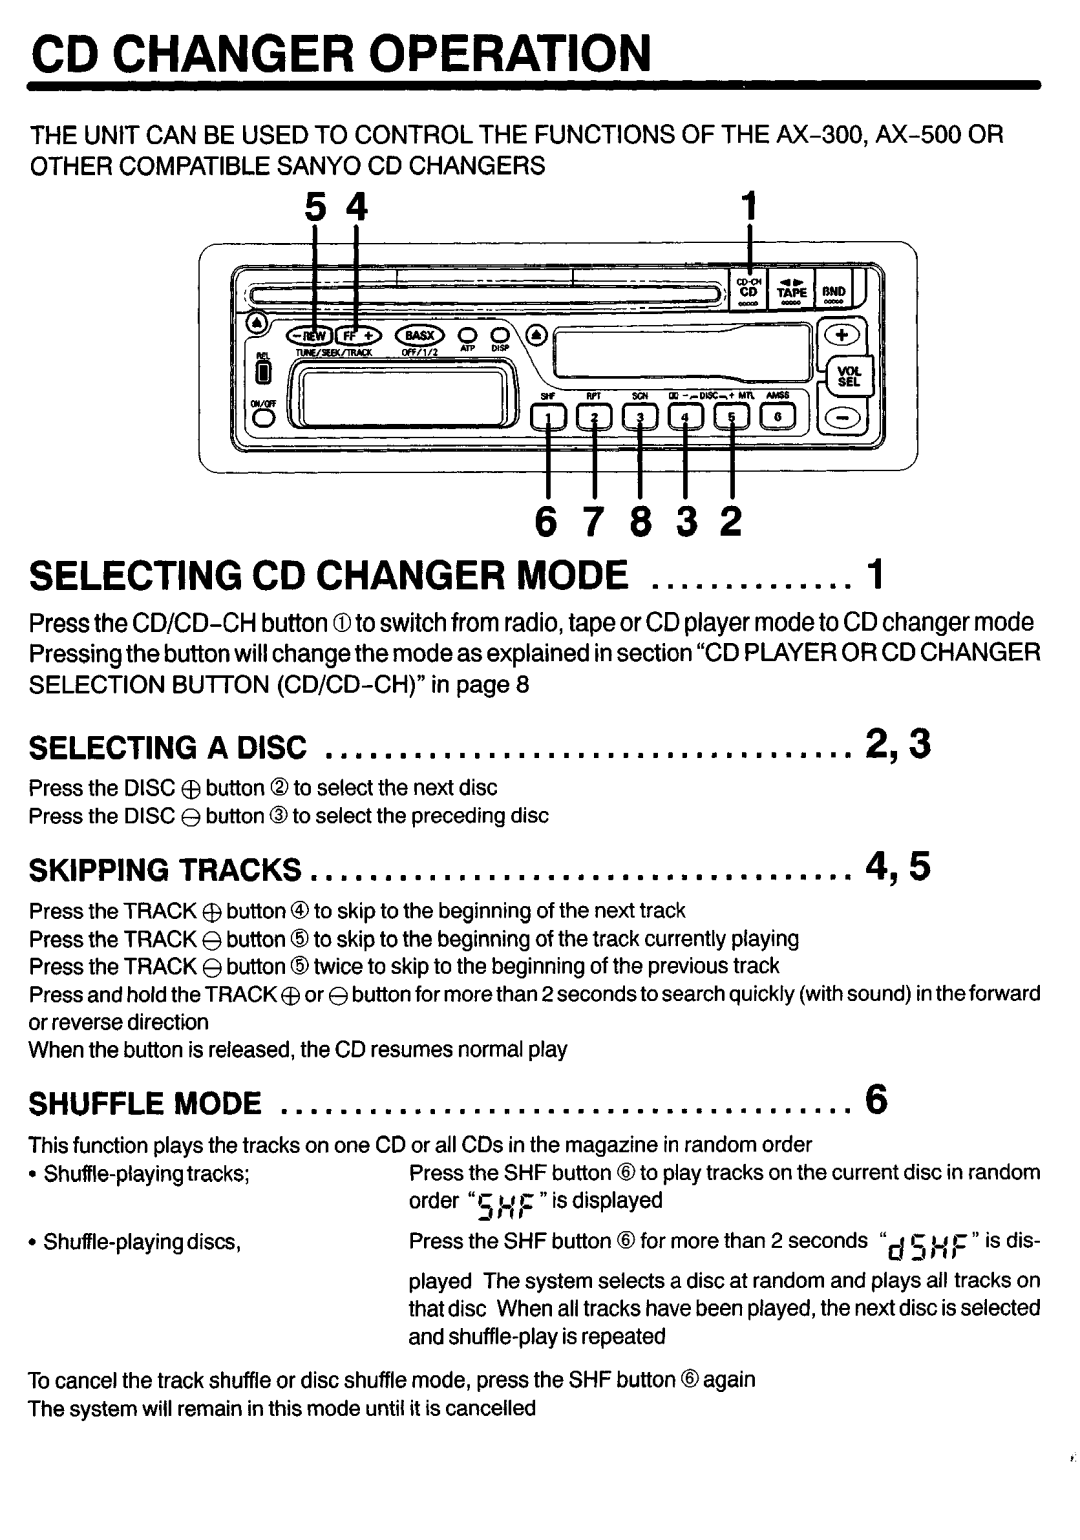 Sanyo FXCD-500 manual Cd Changer Operation, 541, Shuffle Mode, Skipping Tracks 